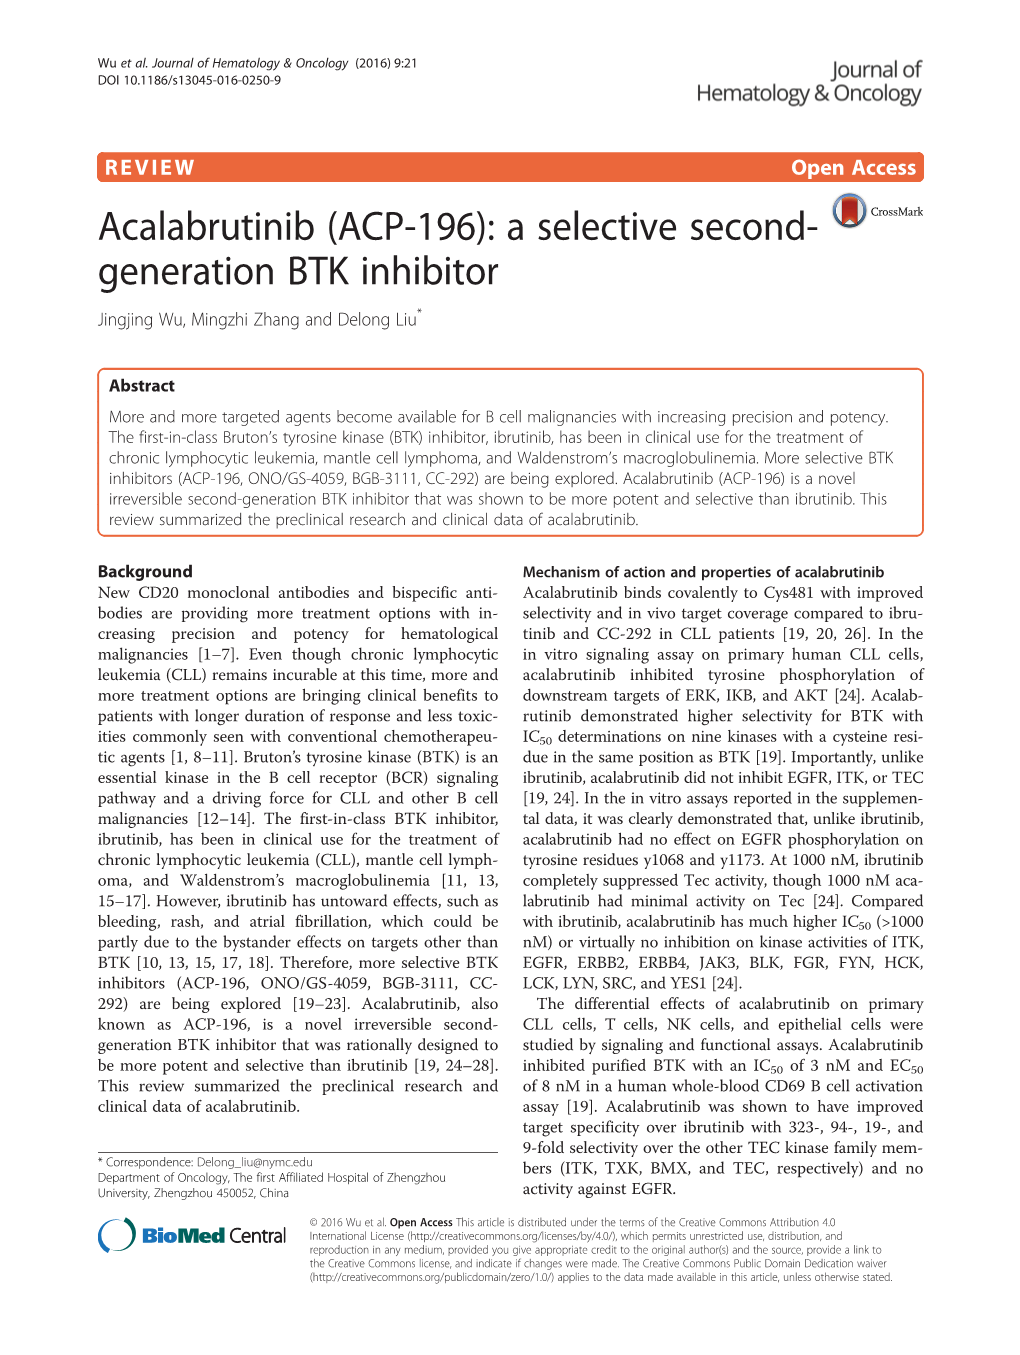 Acalabrutinib (ACP-196): a Selective Second-Generation BTK Inhibitor